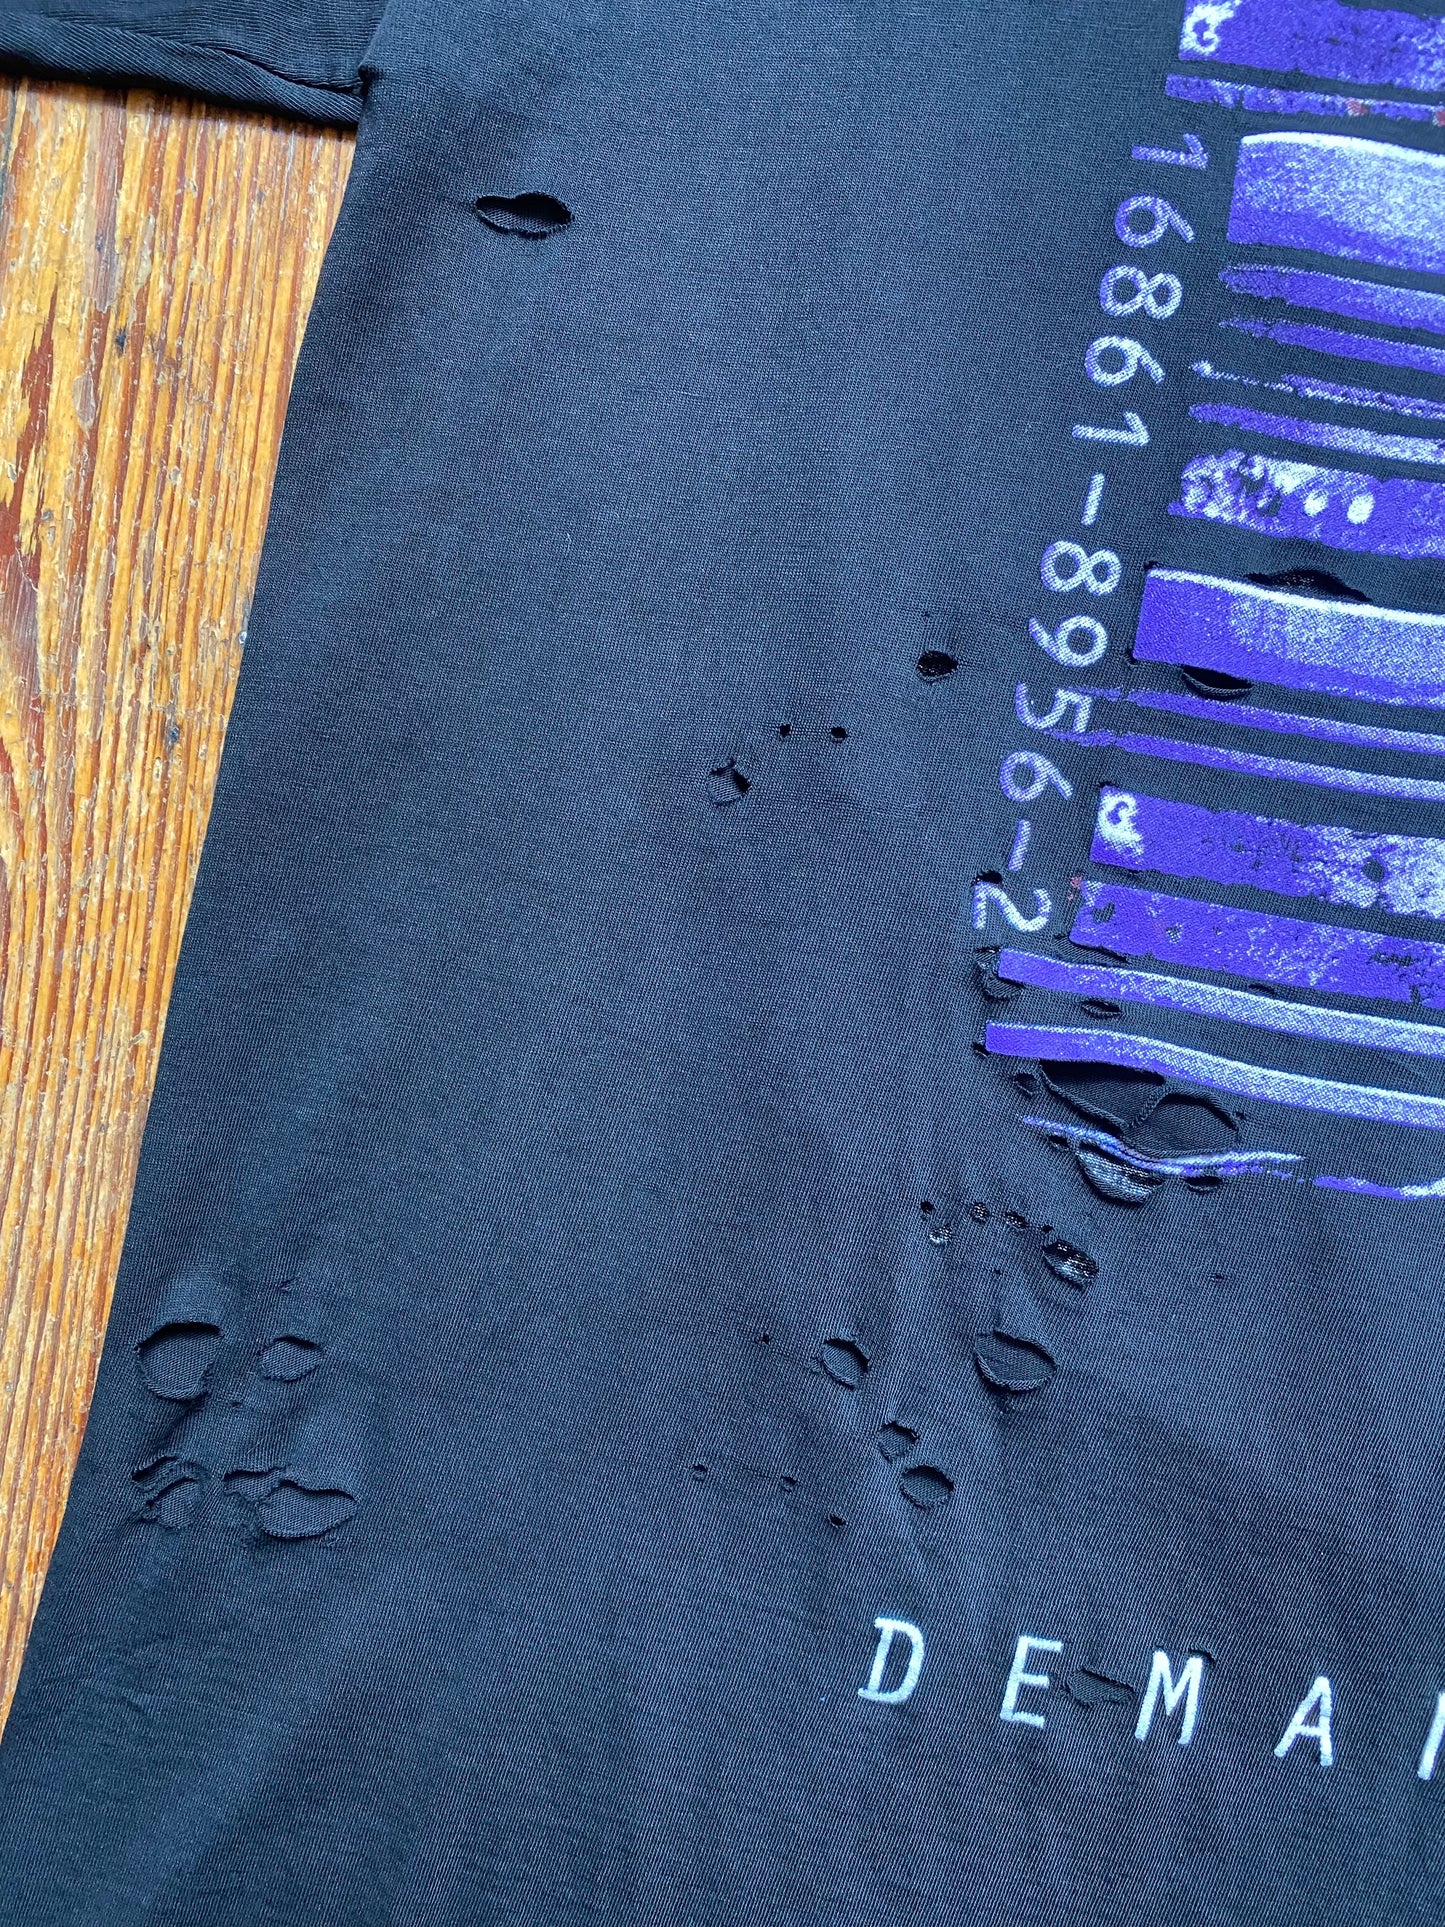 Fear Factory 95’ “Demanufacture” T-Shirt